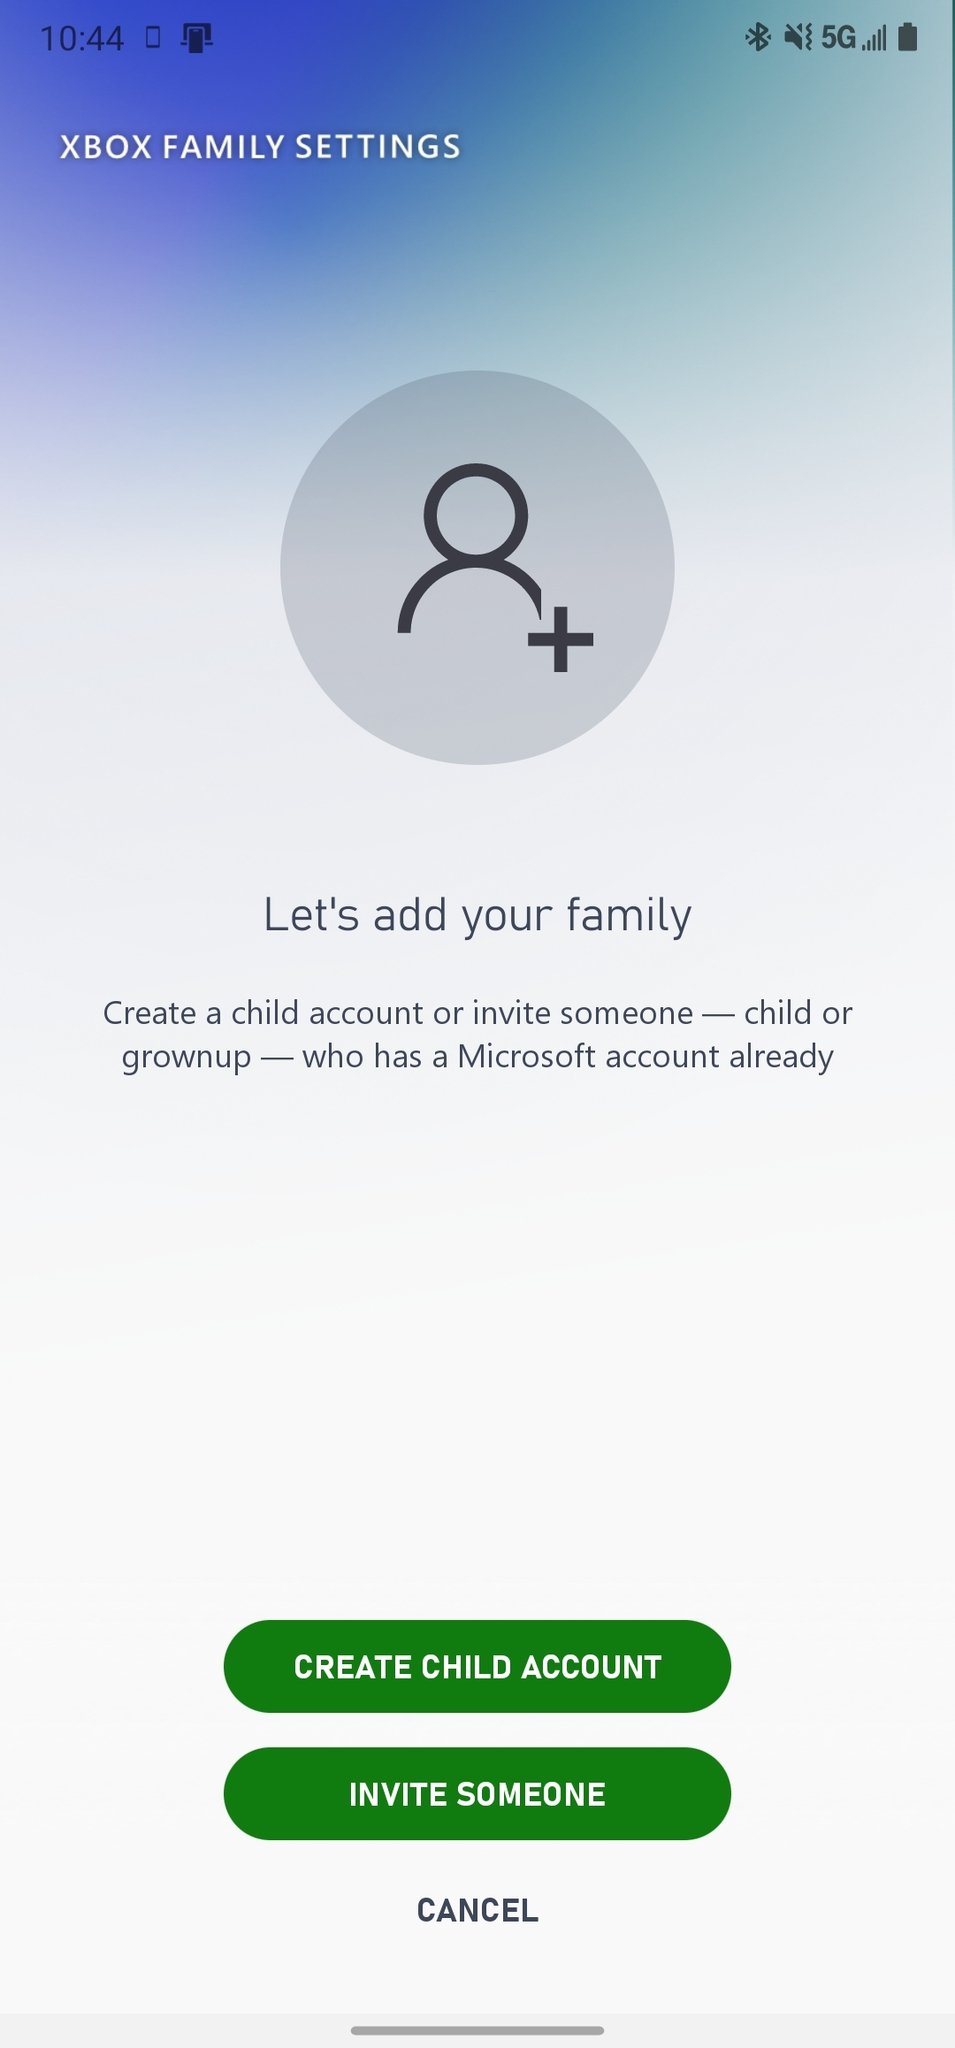 Xbox Family Settings App